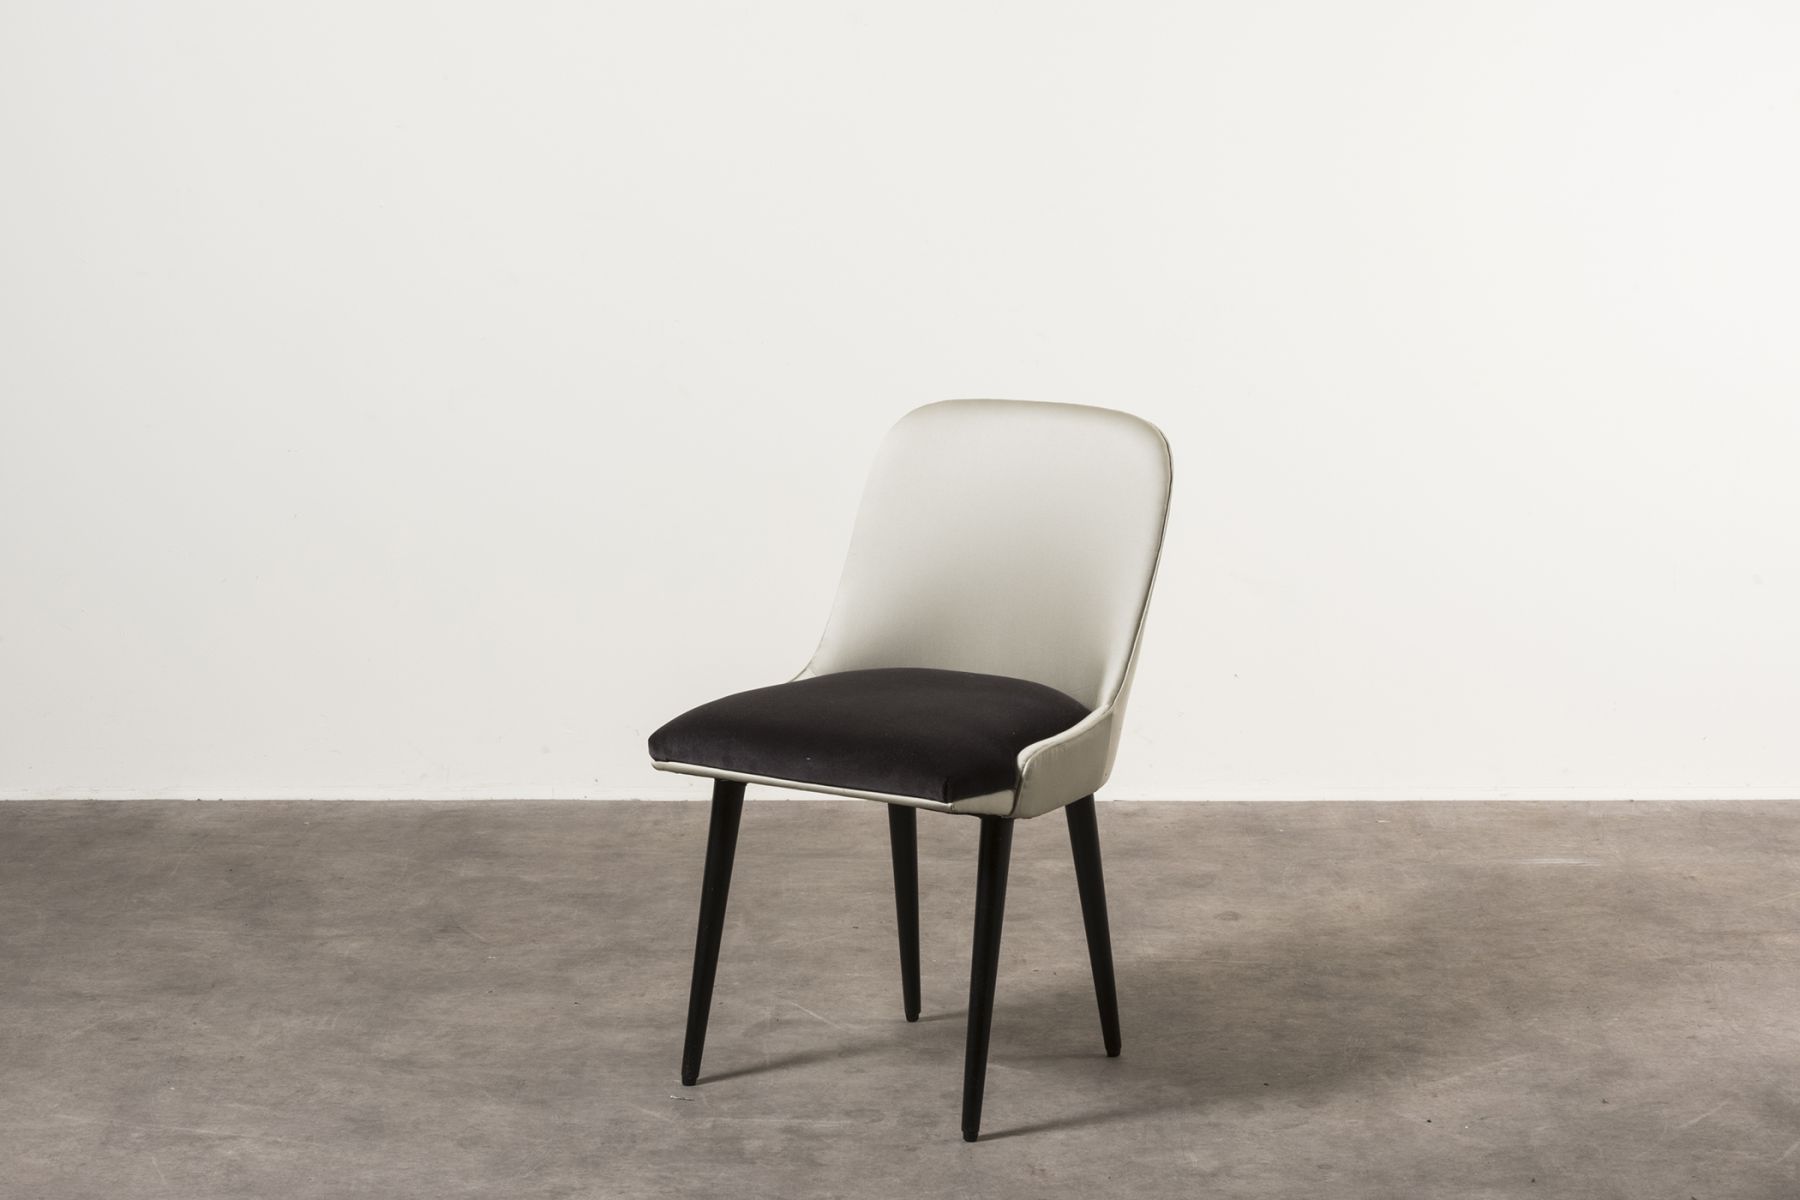  Two chairs mod. S34  Osvaldo Borsani pic-1